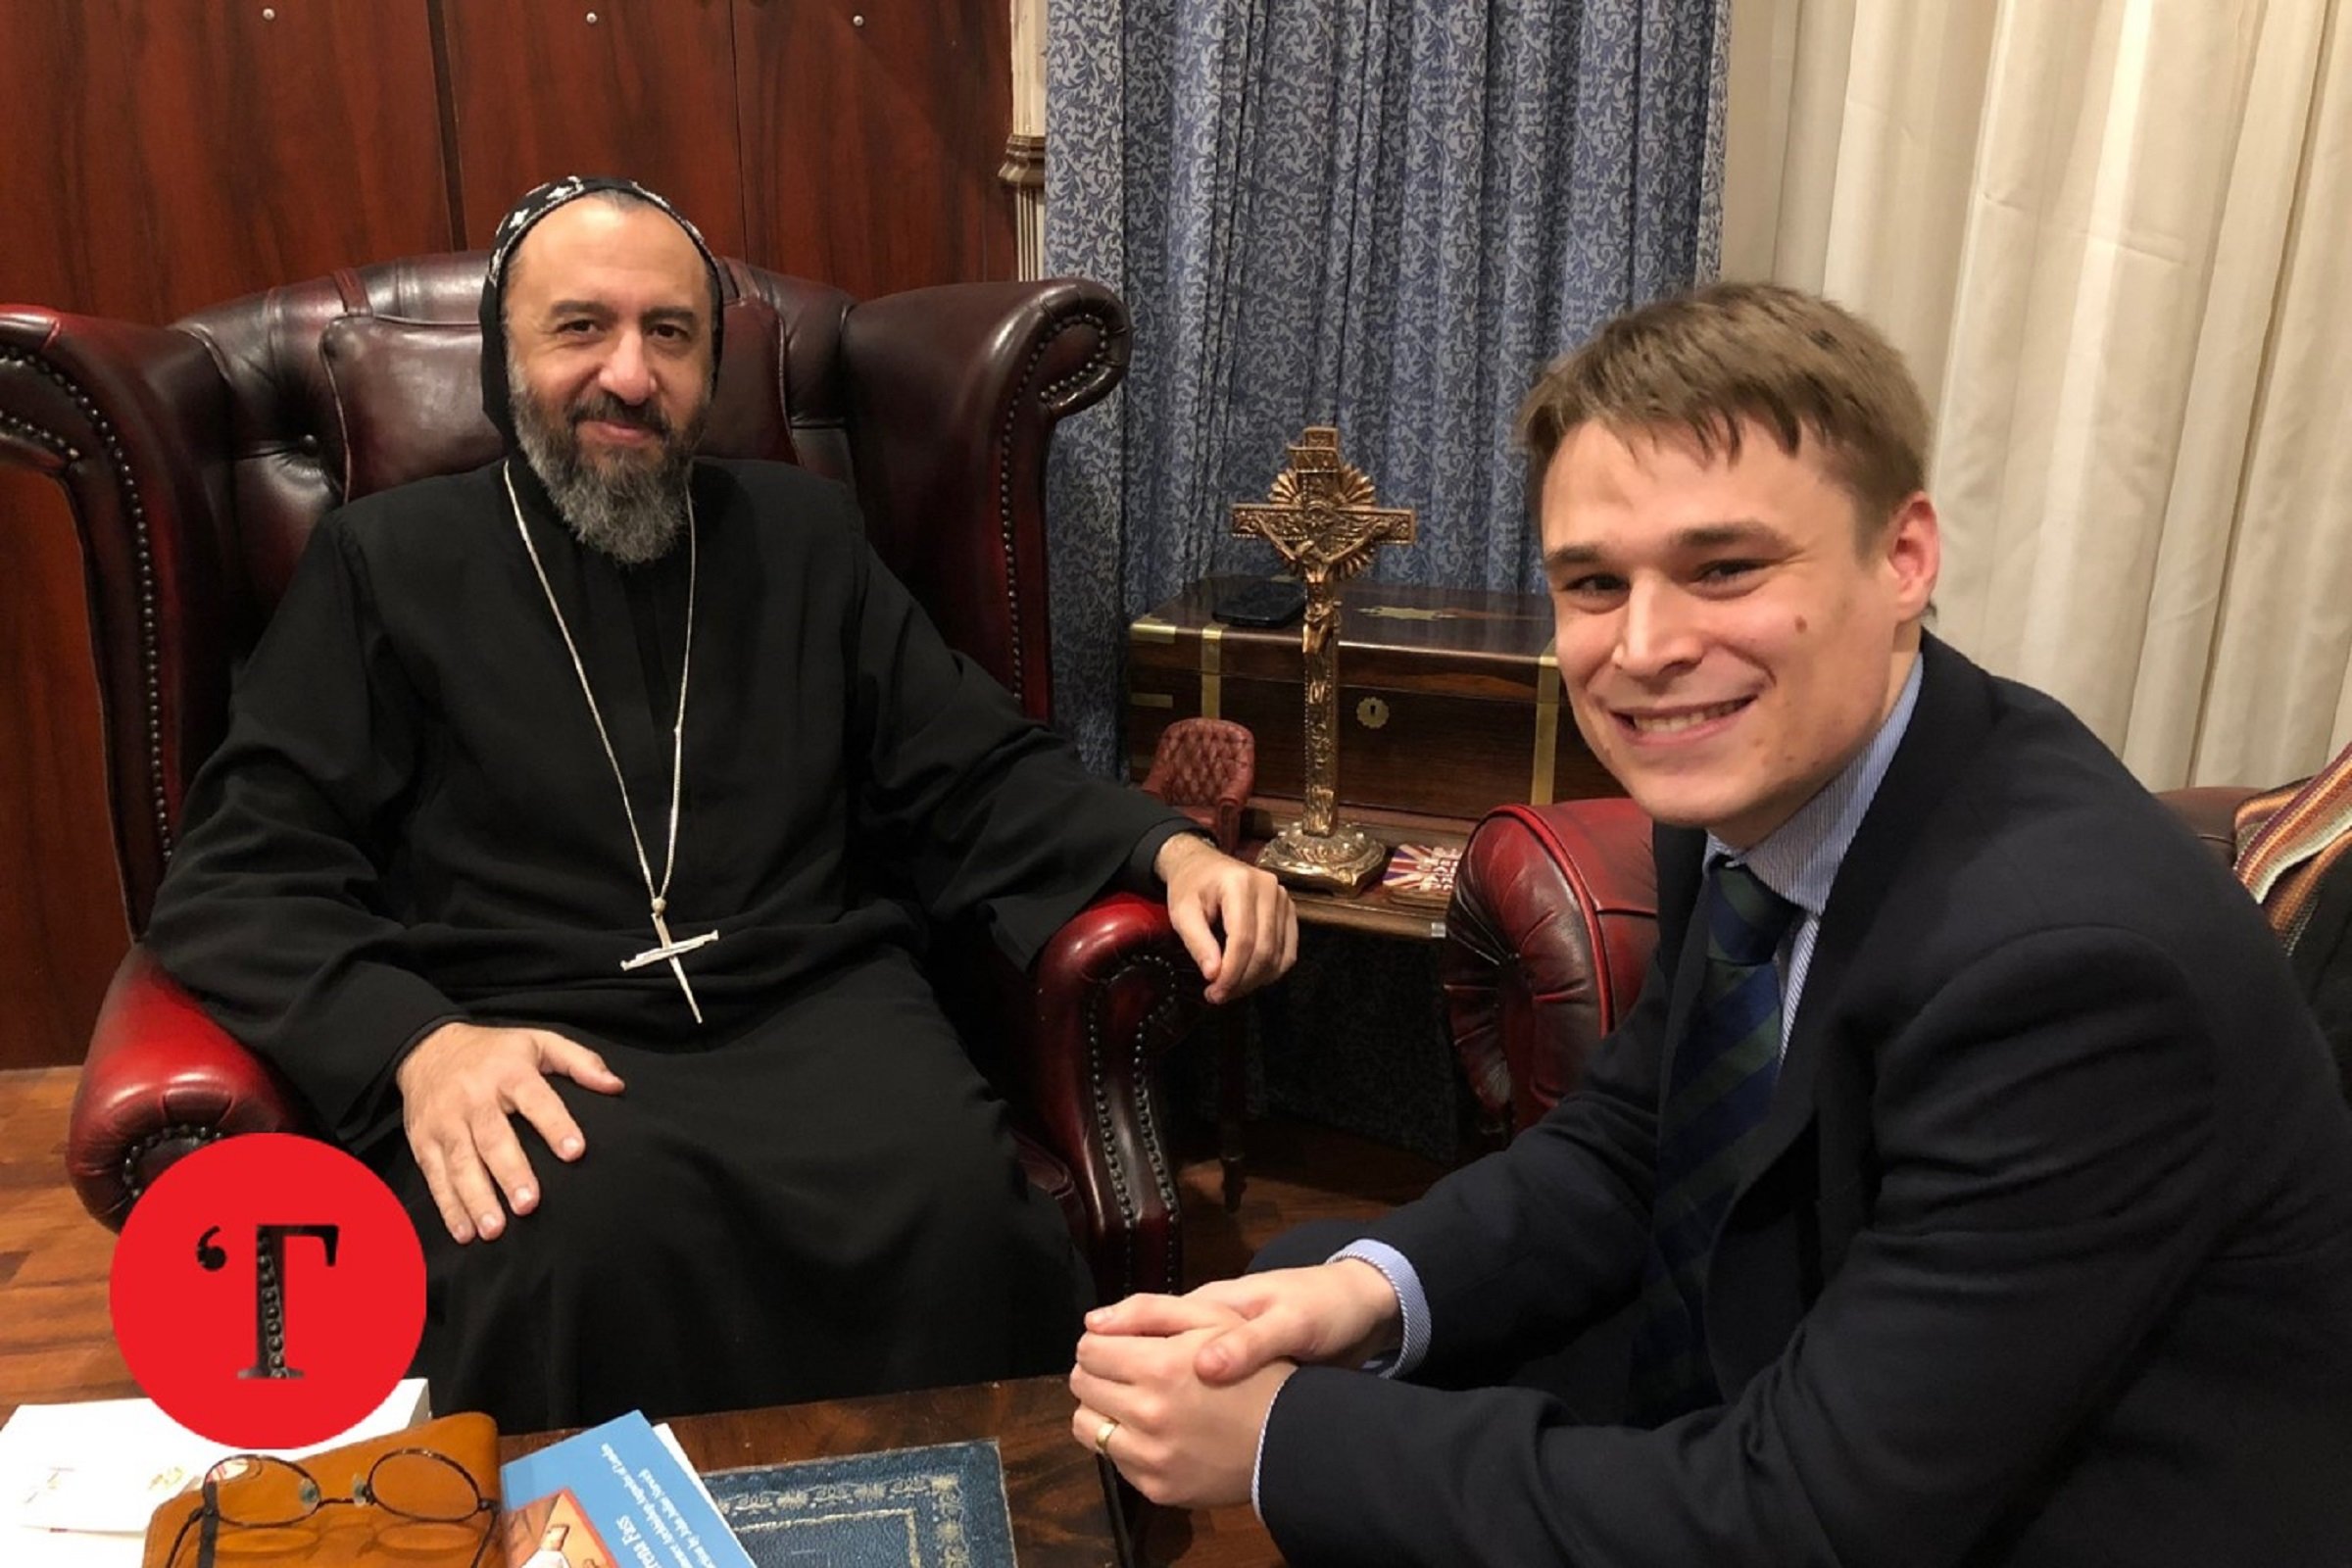 Ben Ryan in conversation with Archbishop Angaelos